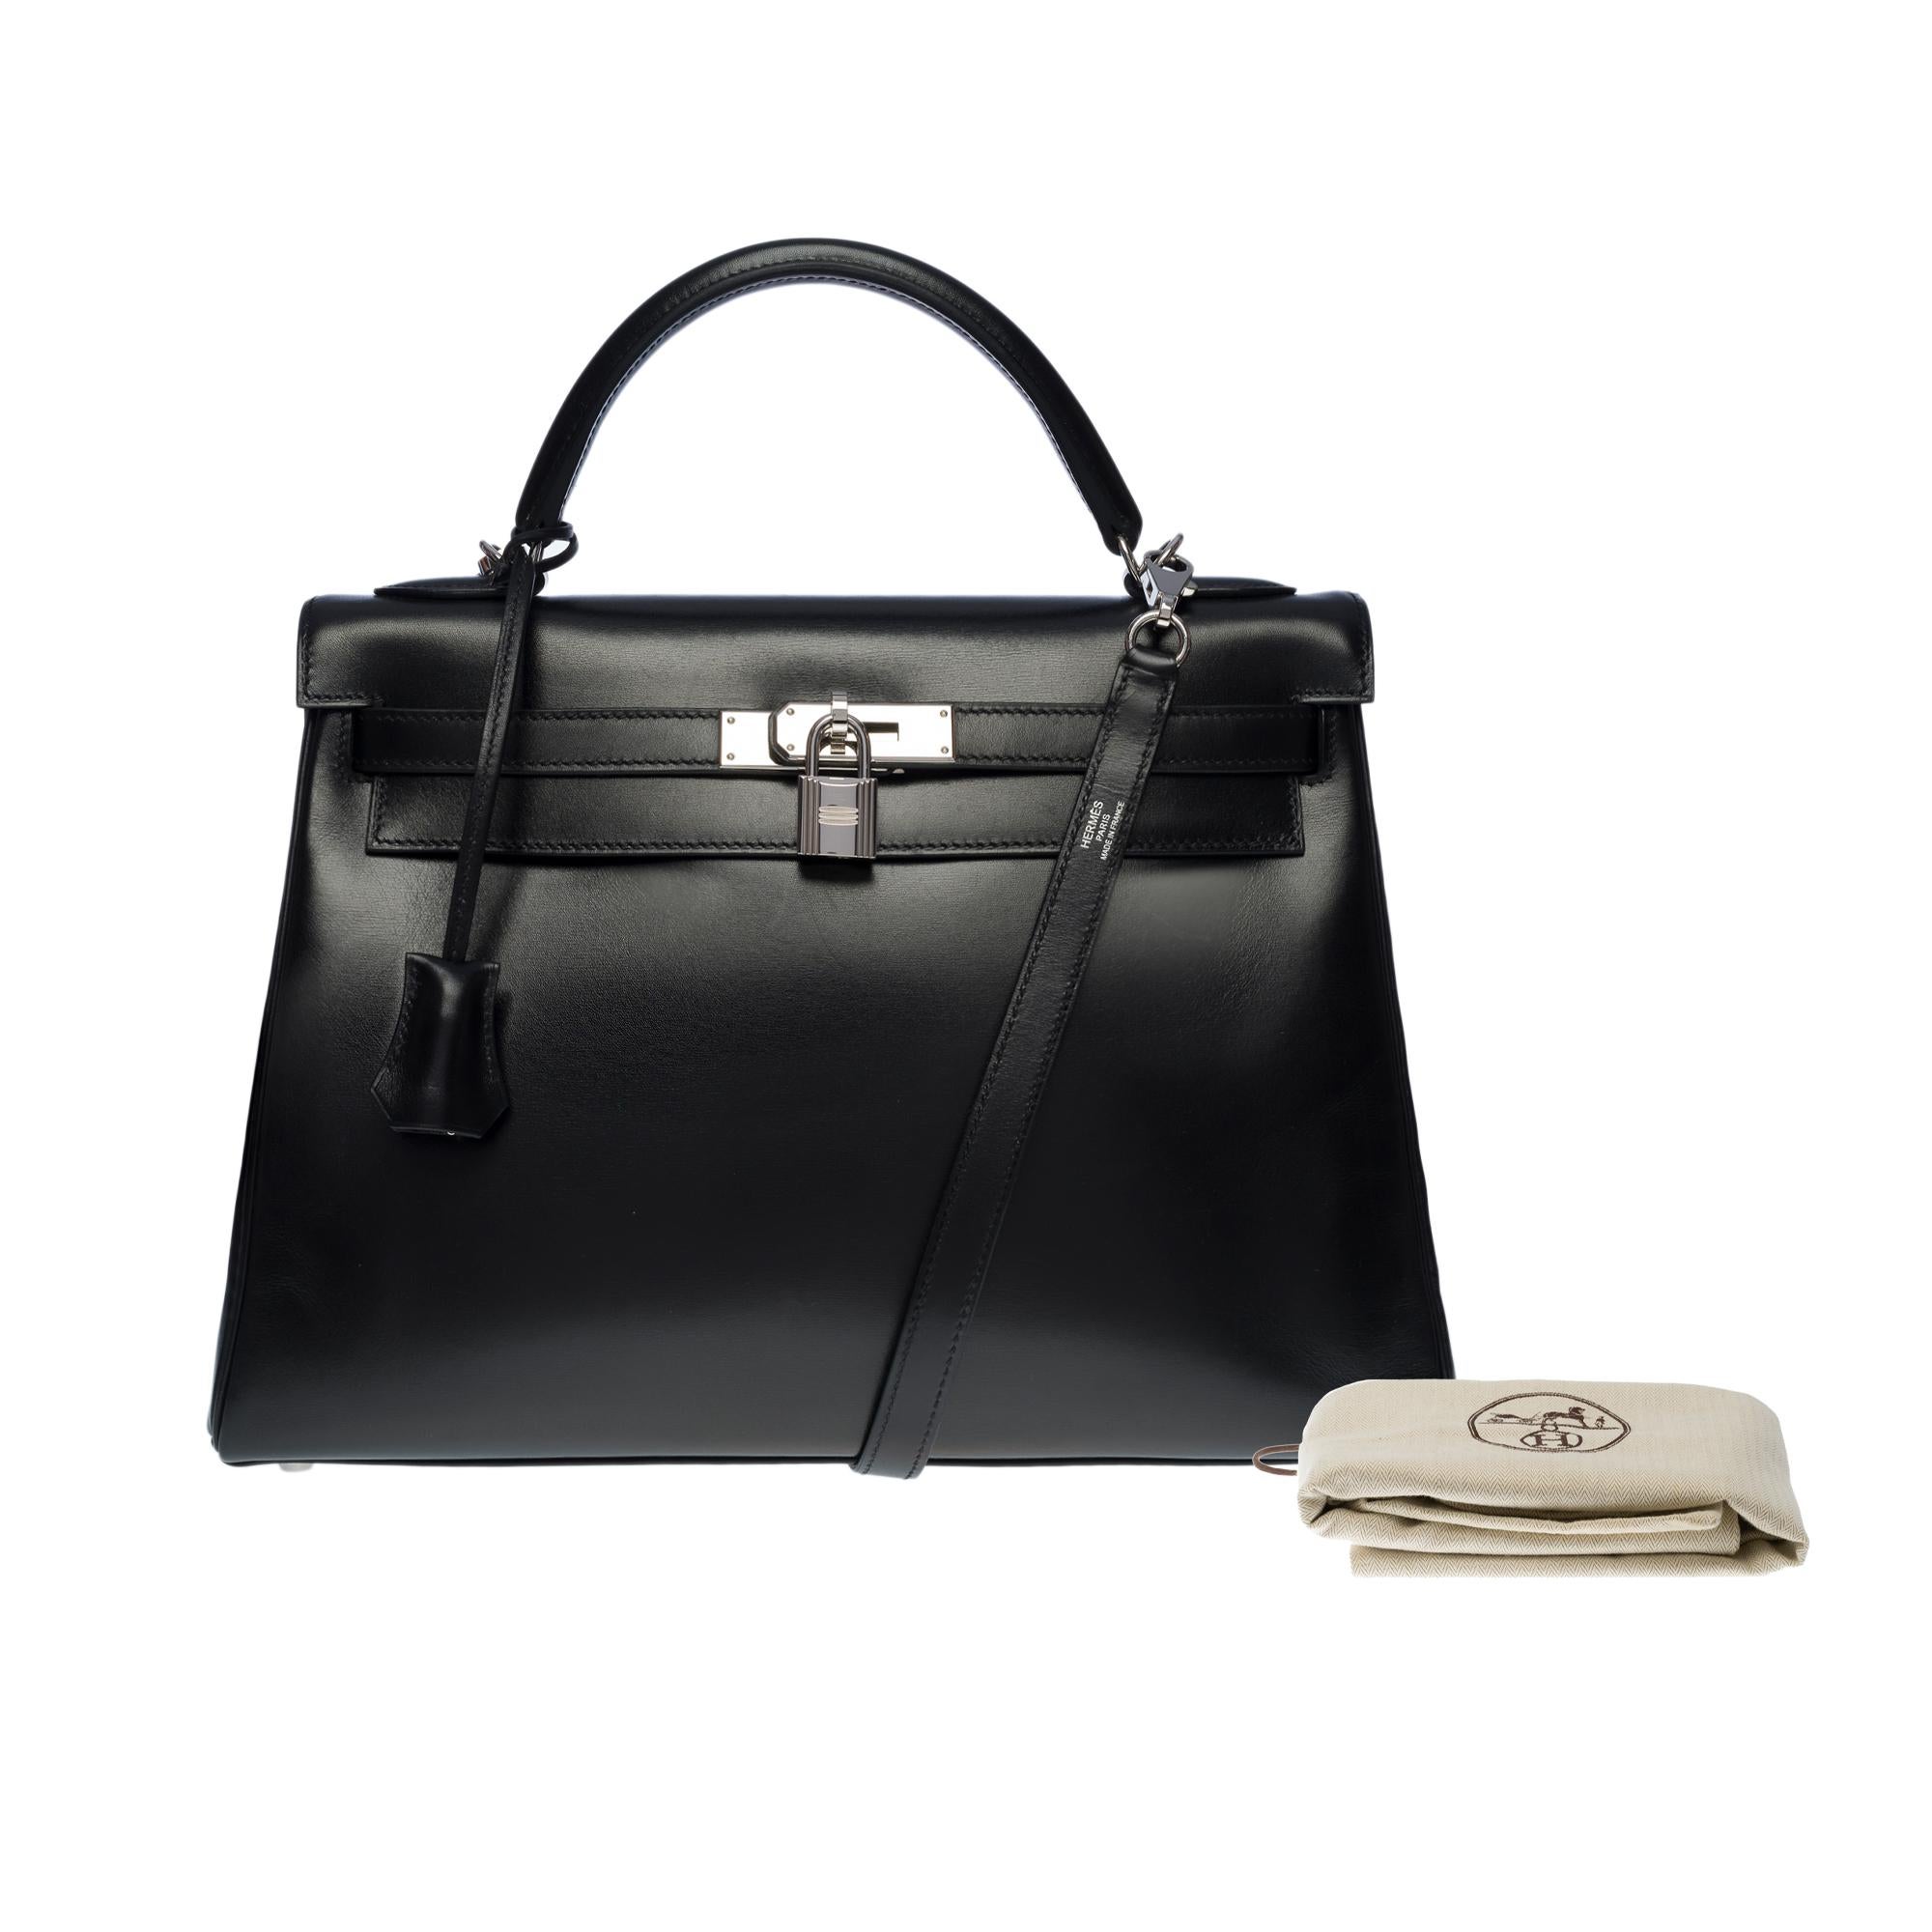 Rare Hermès Kelly 32 retourne handbag strap in black box calf leather, SHW 4